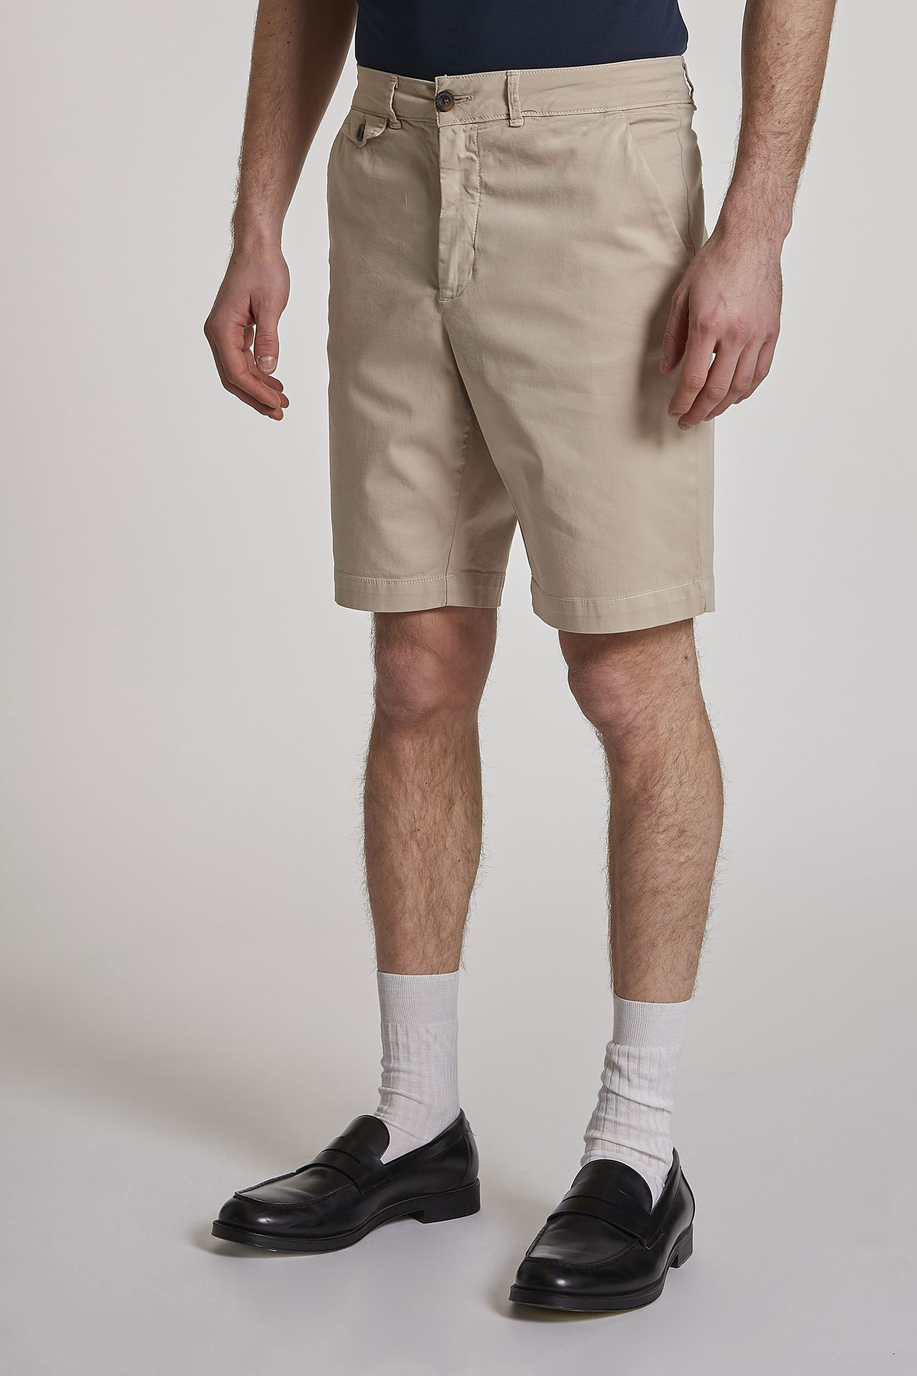 Men's slim-fit cotton Bermuda shorts - Summer must-haves | La Martina - Official Online Shop